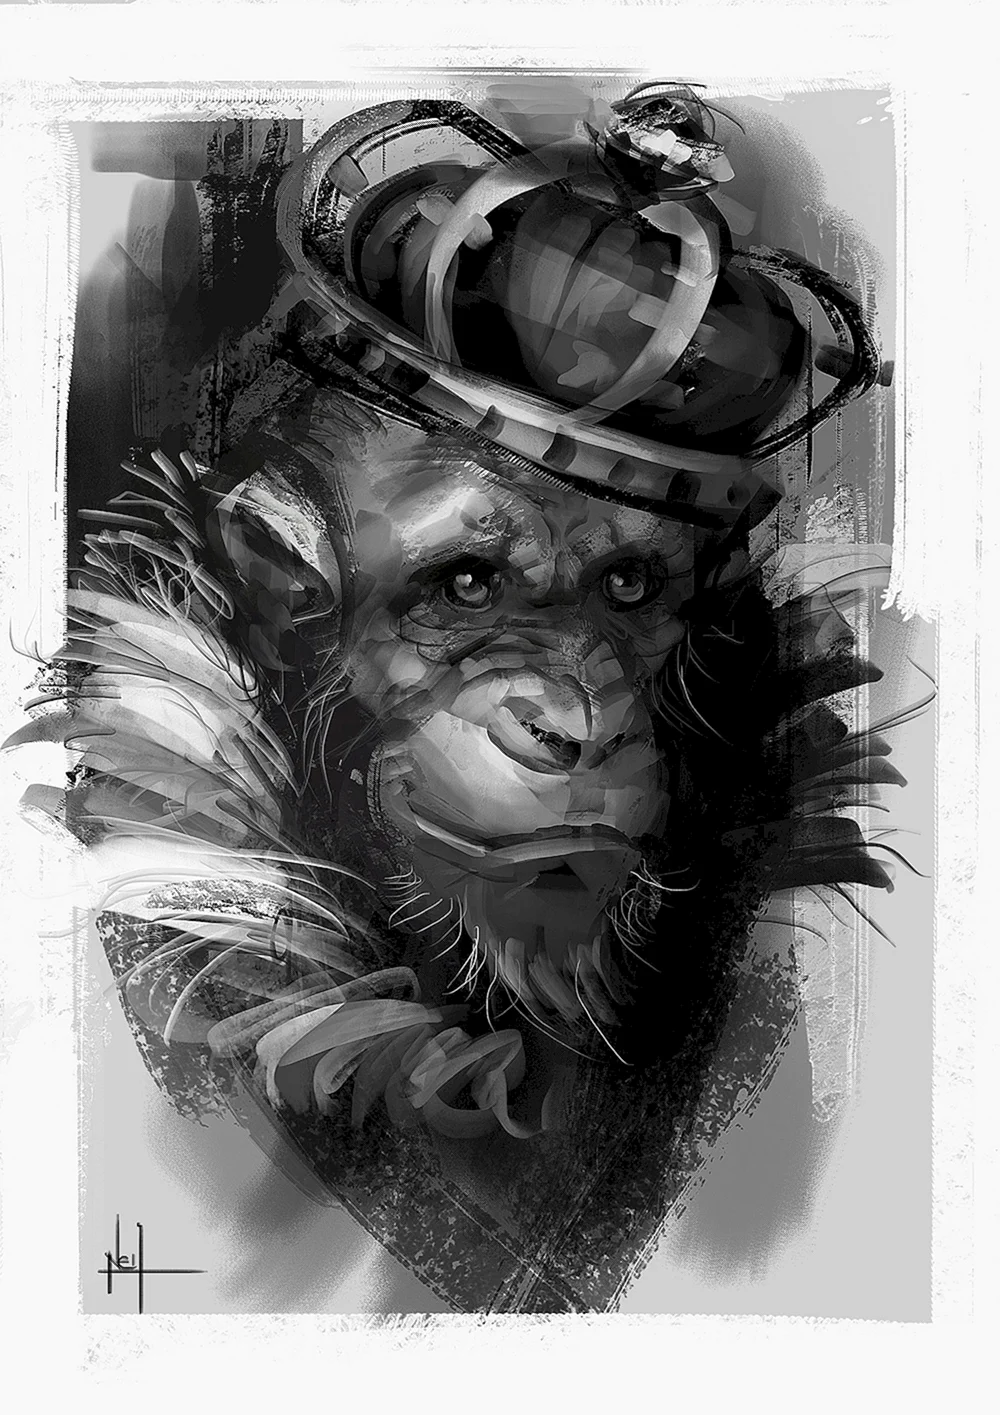 Ape King